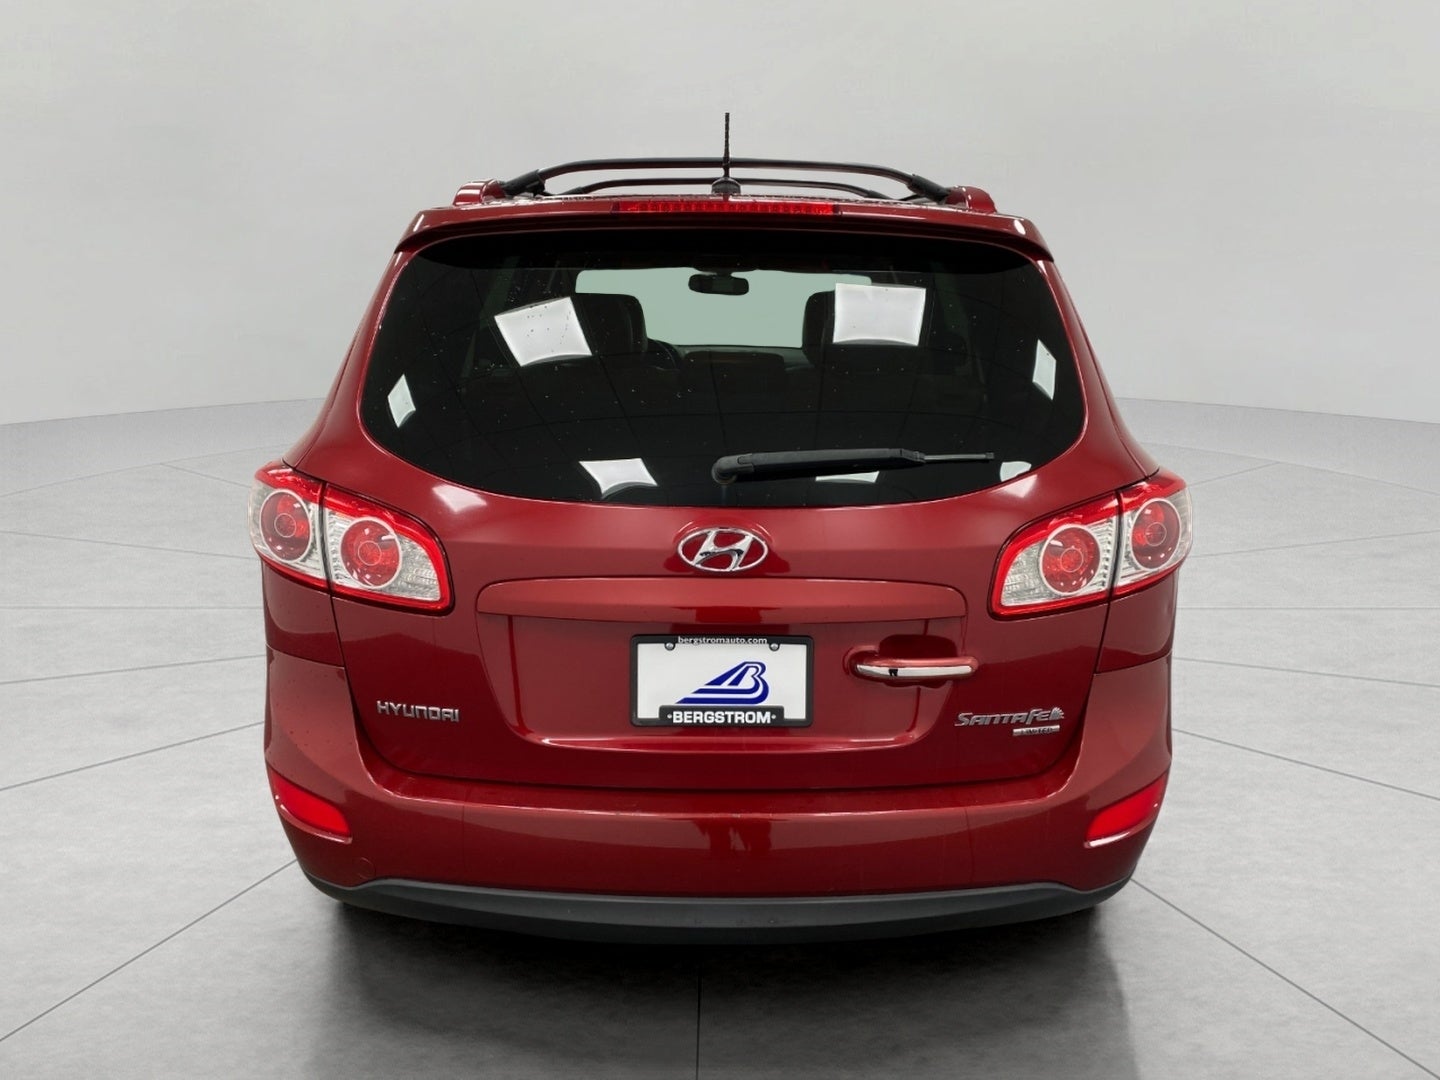 2011 Hyundai Santa Fe FWD 4dr I4 Auto Limited